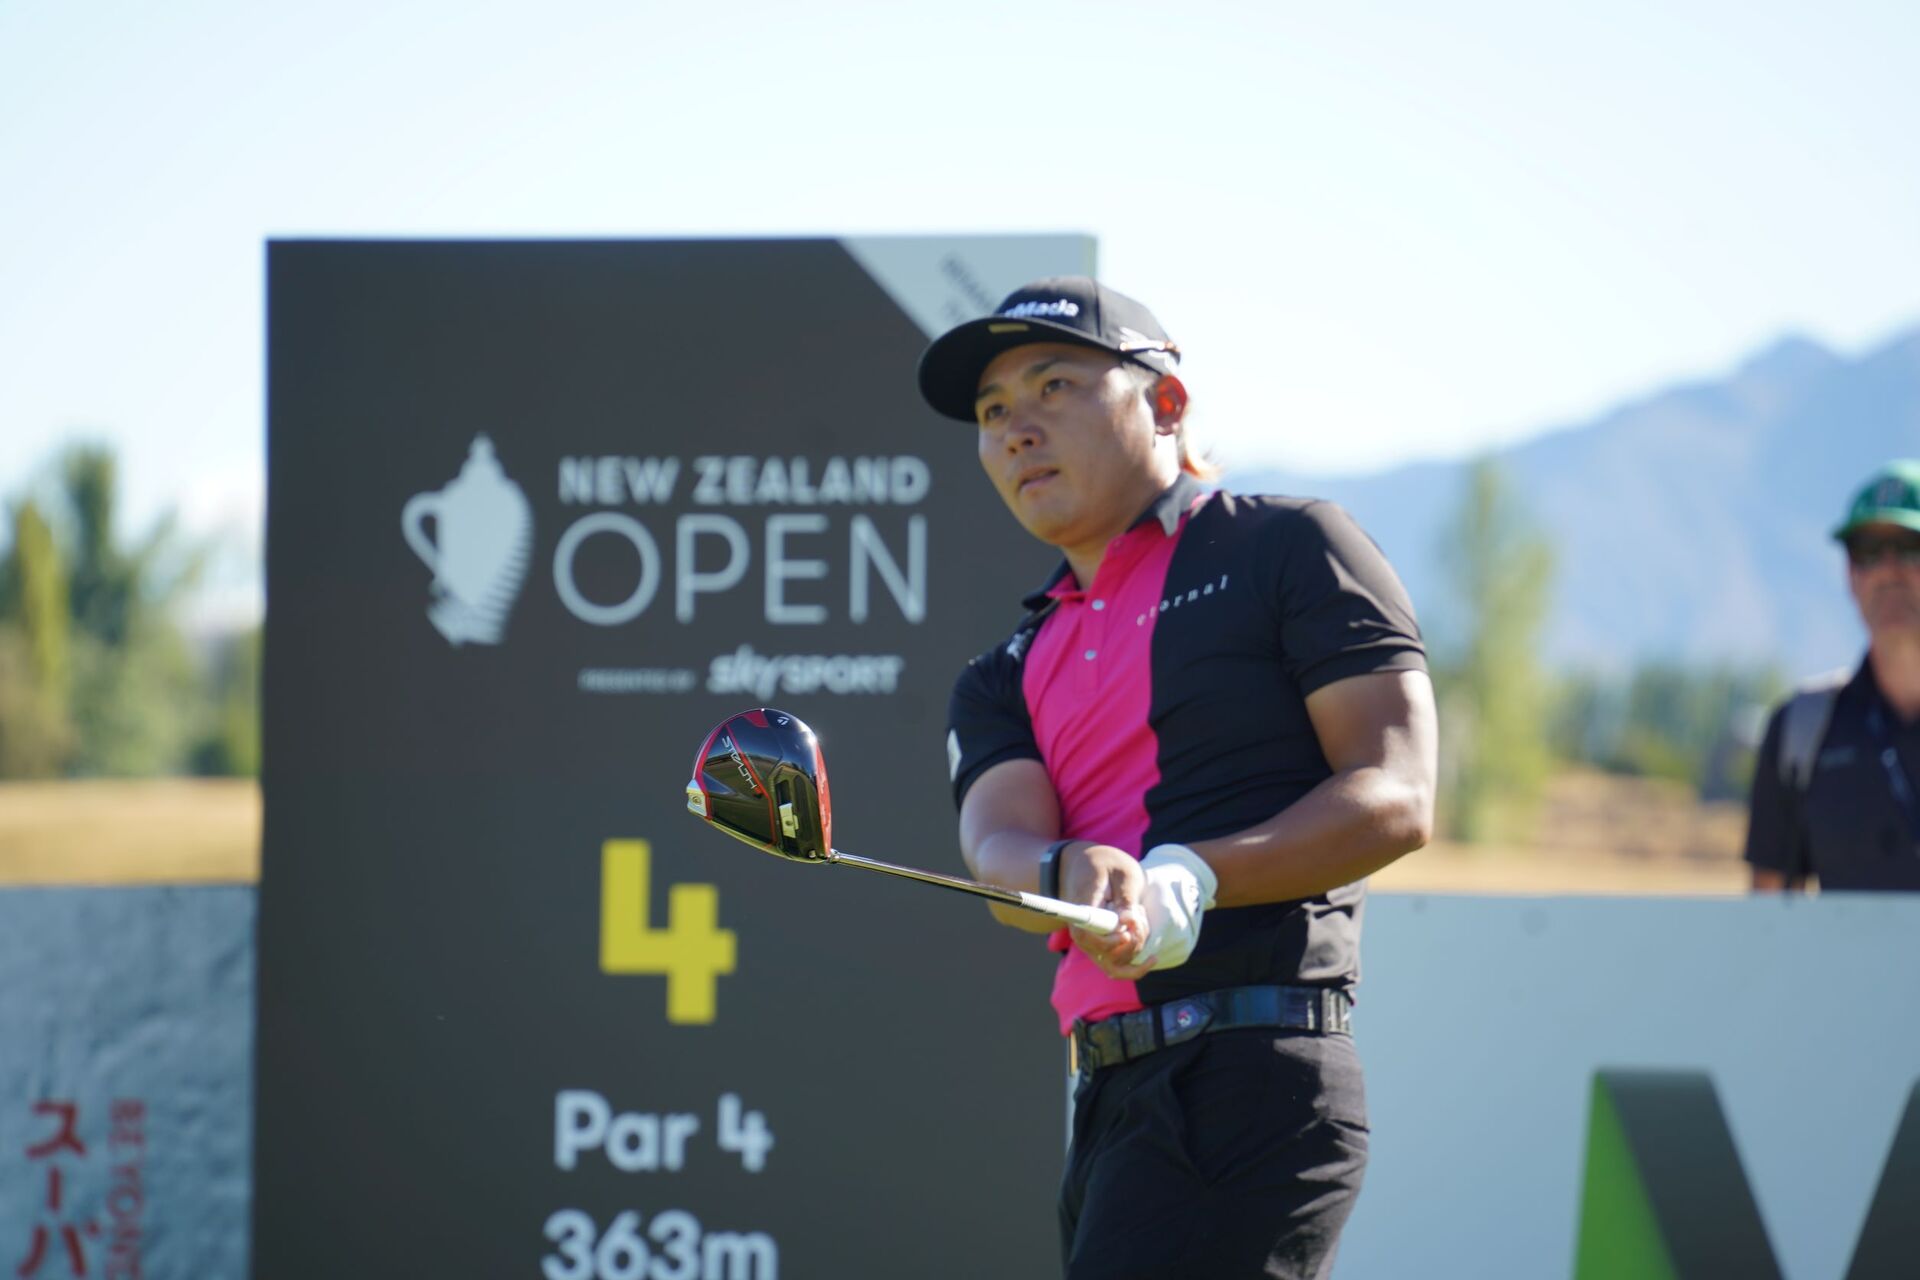 Asaji, Ikemura off to a solid start in New Zealand